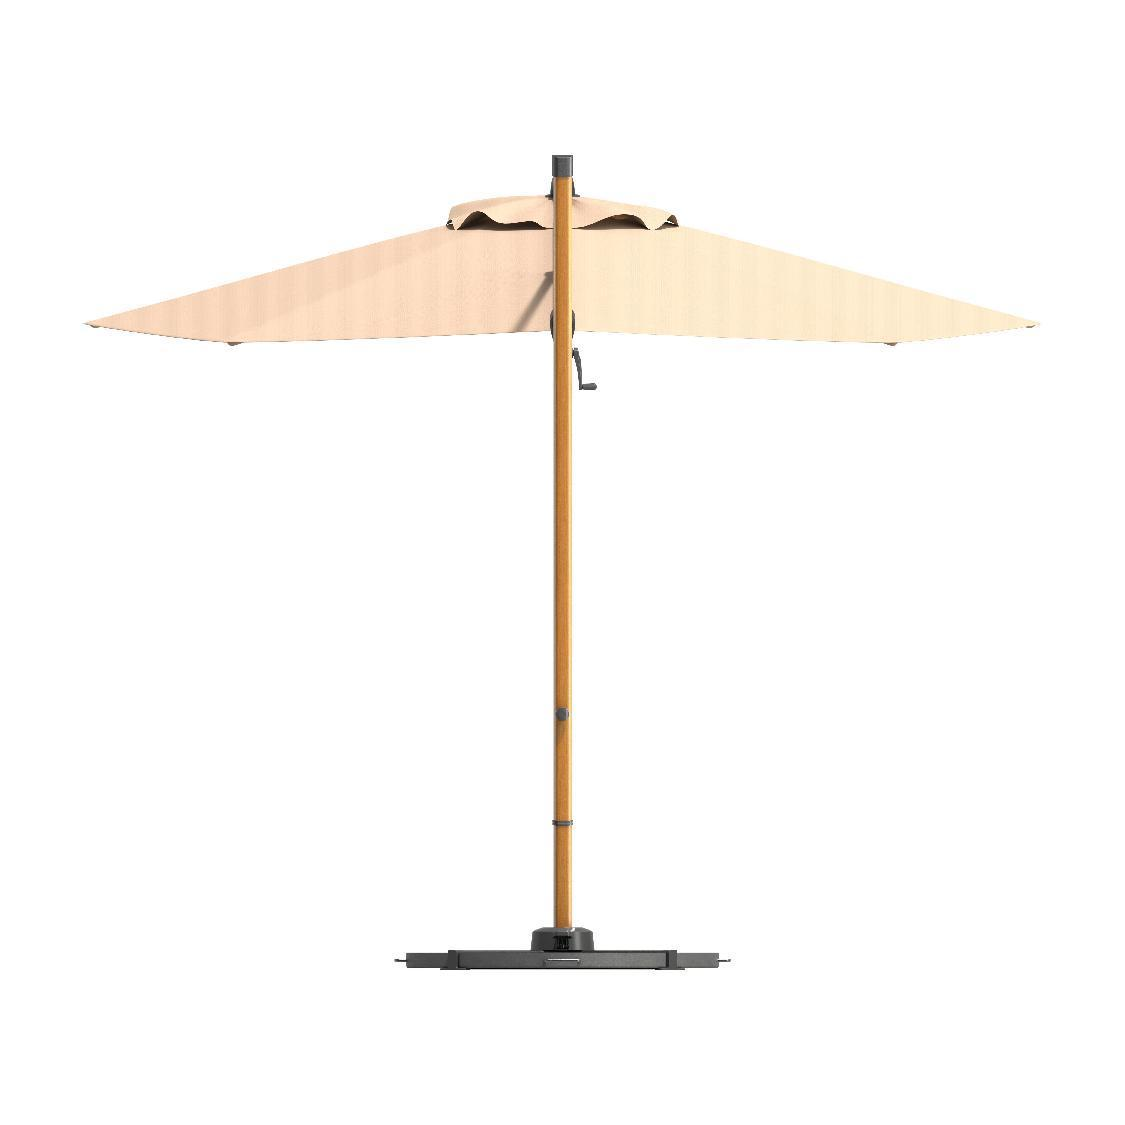 10 ft Round Patio Umbrella, Outdoor Round Umbrella for Garden Deck Pool Patio ZY137